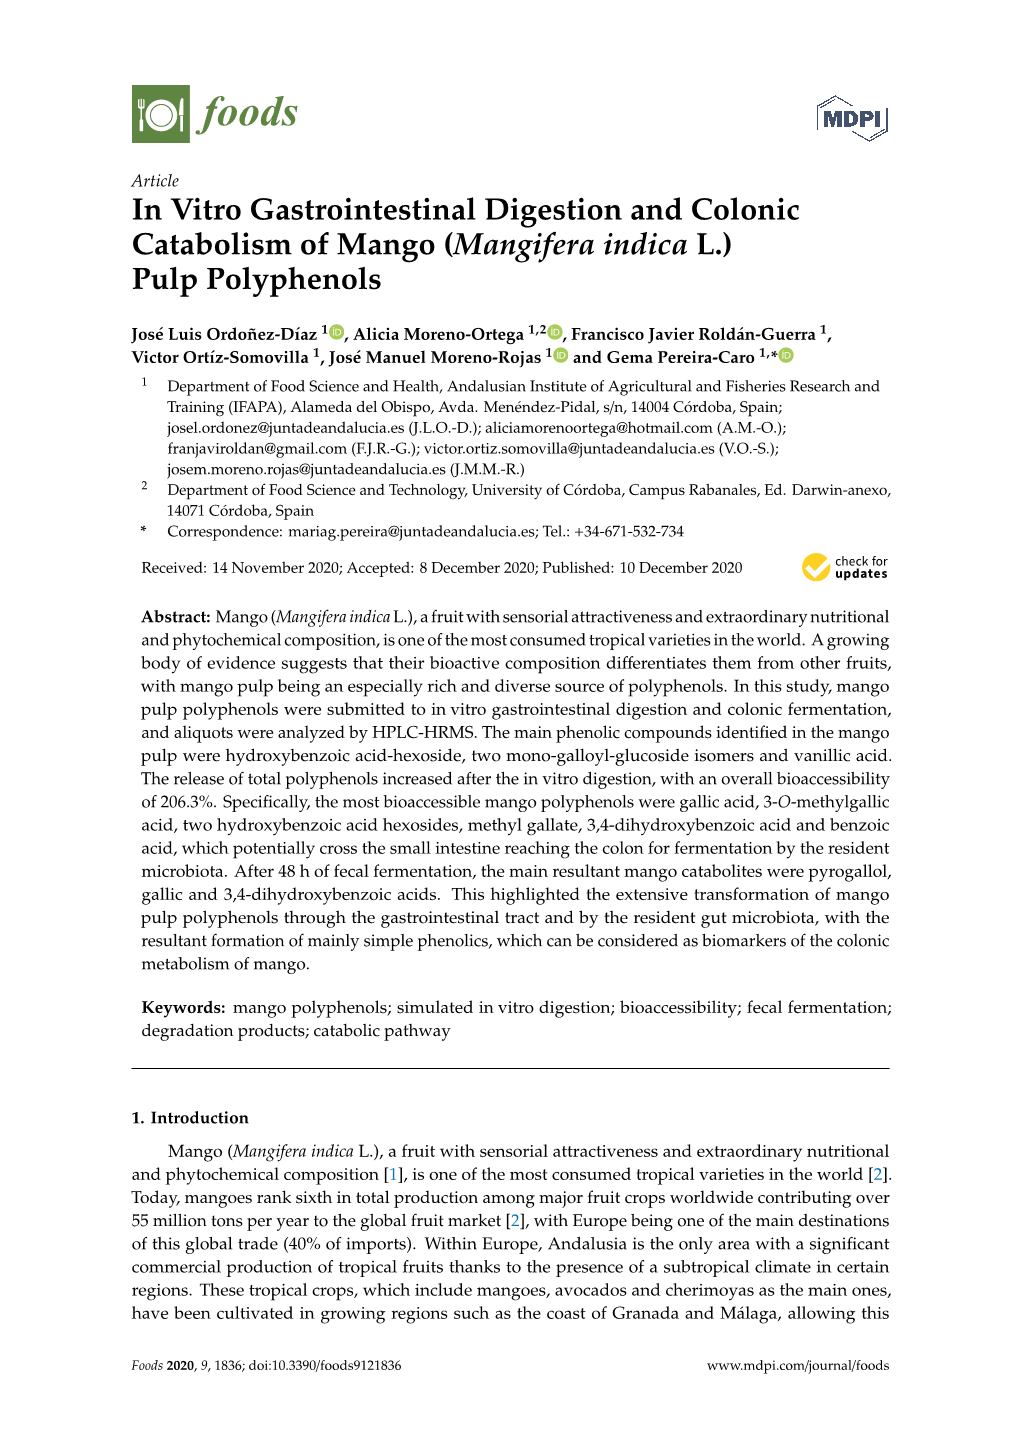 In Vitro Gastrointestinal Digestion and Colonic Catabolism of Mango (Mangifera Indica L.) Pulp Polyphenols